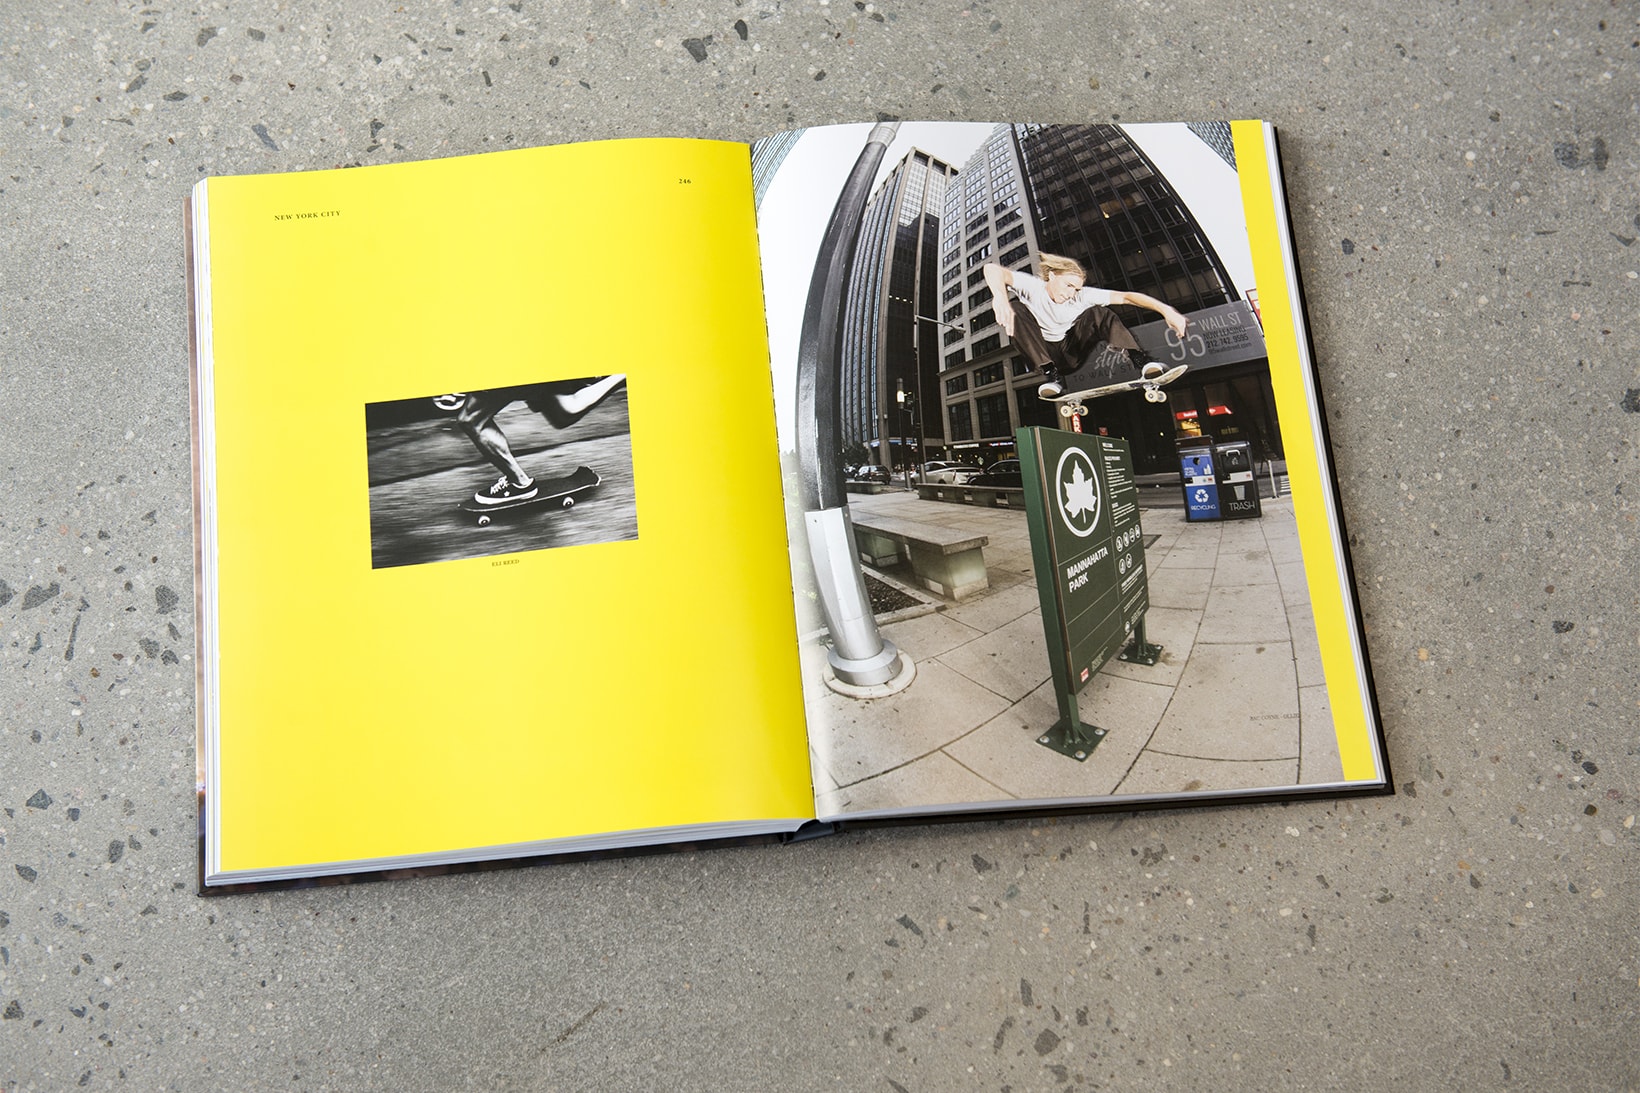 JENKEM Vol 2 volume skateboarding book magazine release date info drop 2018 april spring summer